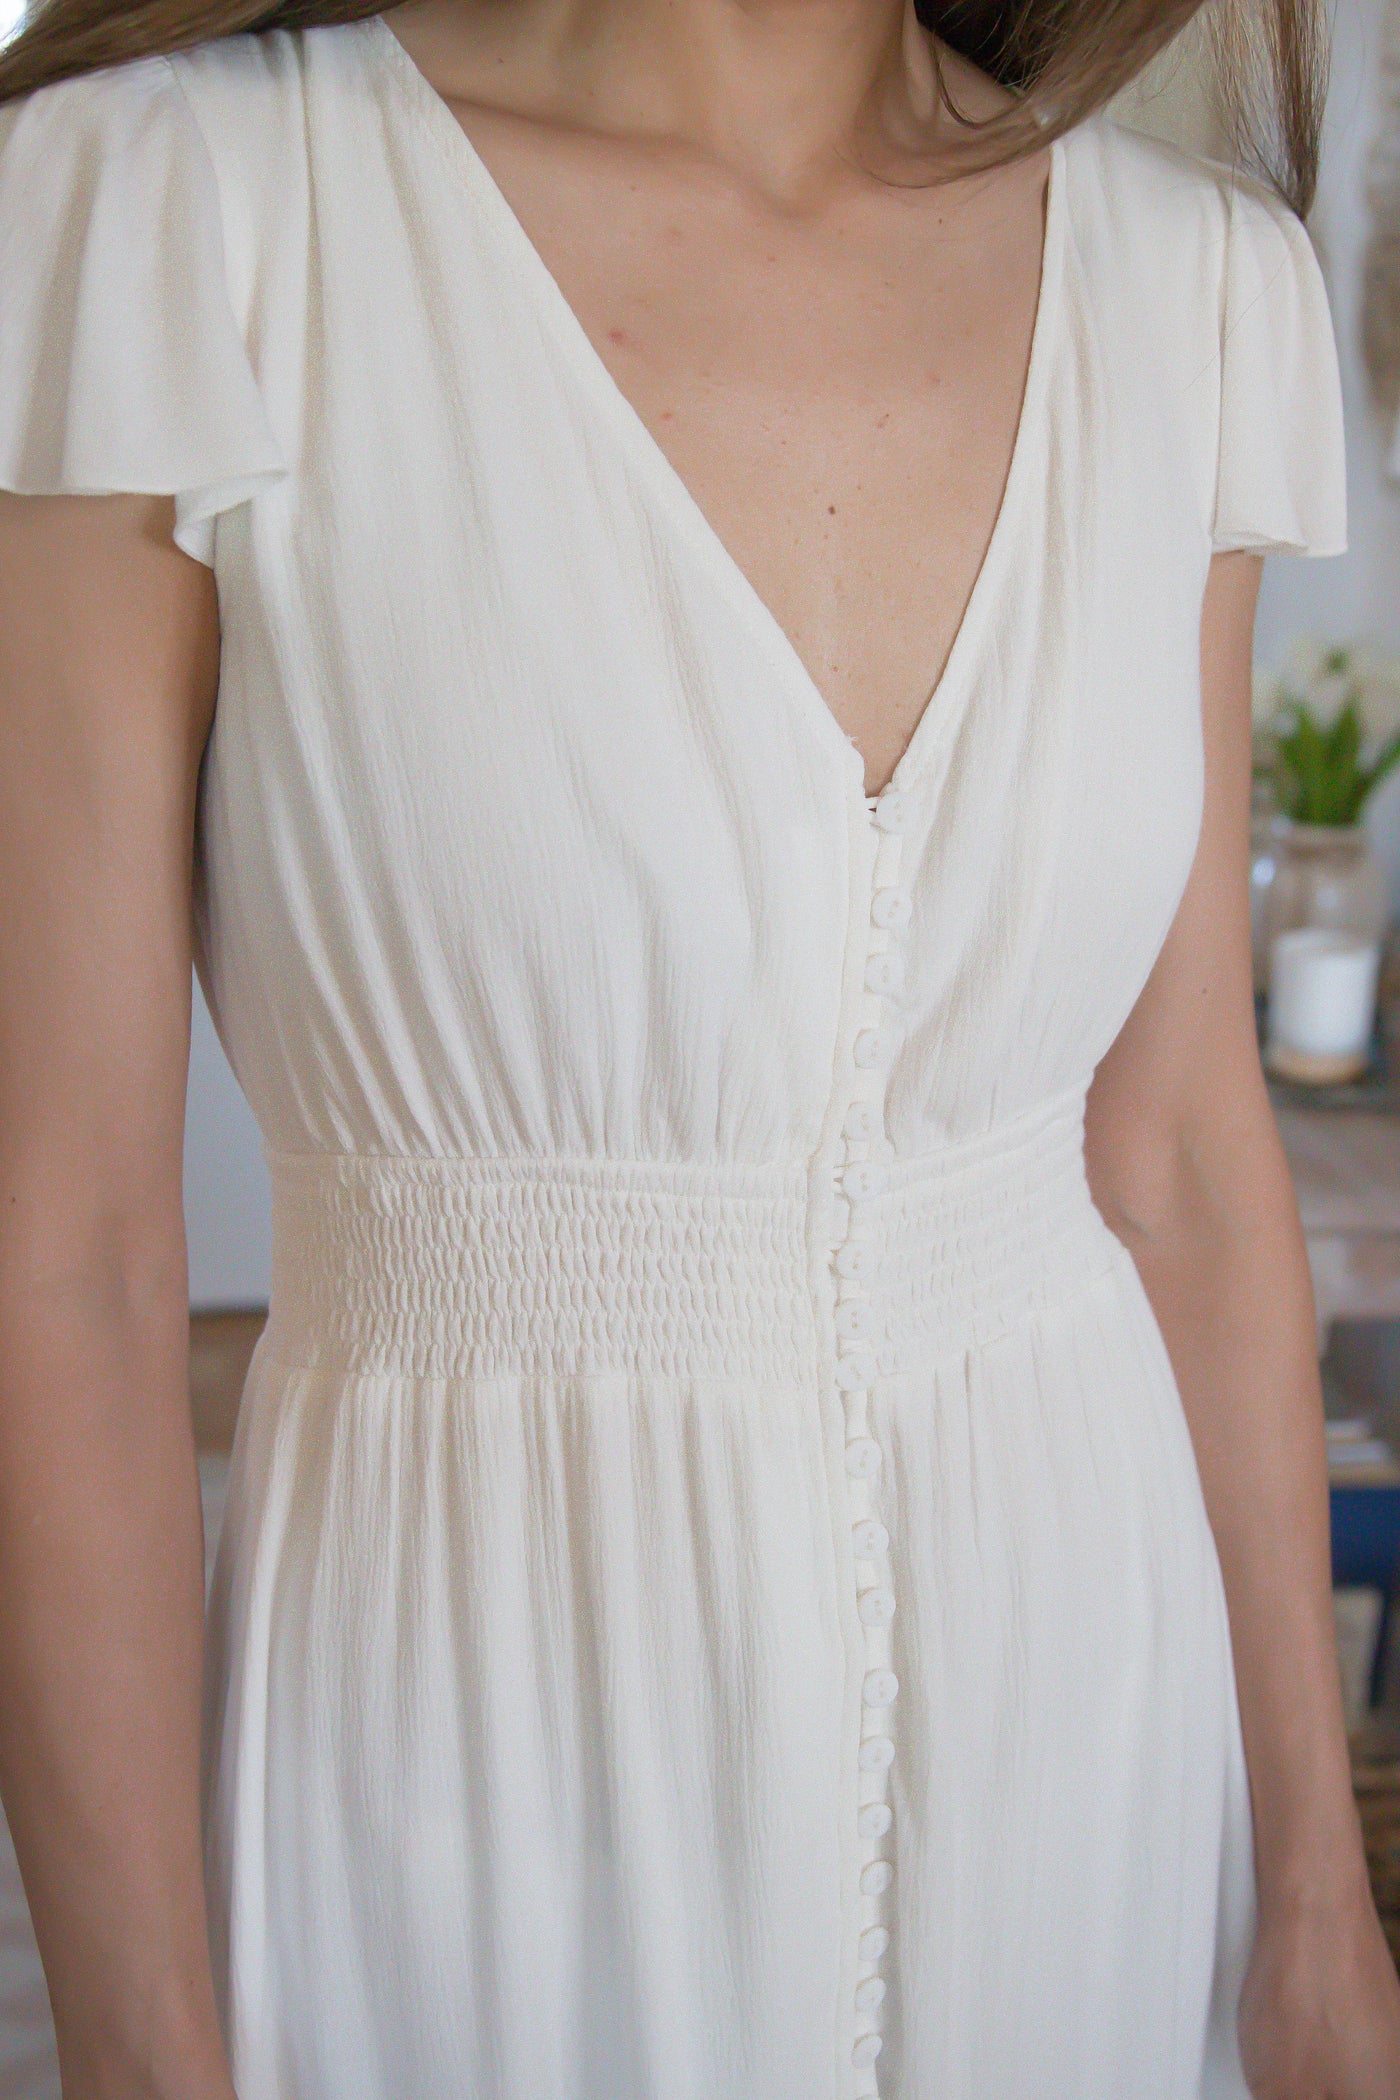 Women's White Midi Dress- Dress With Elastic Waistband- White Ruffle Dress- Beach Dress